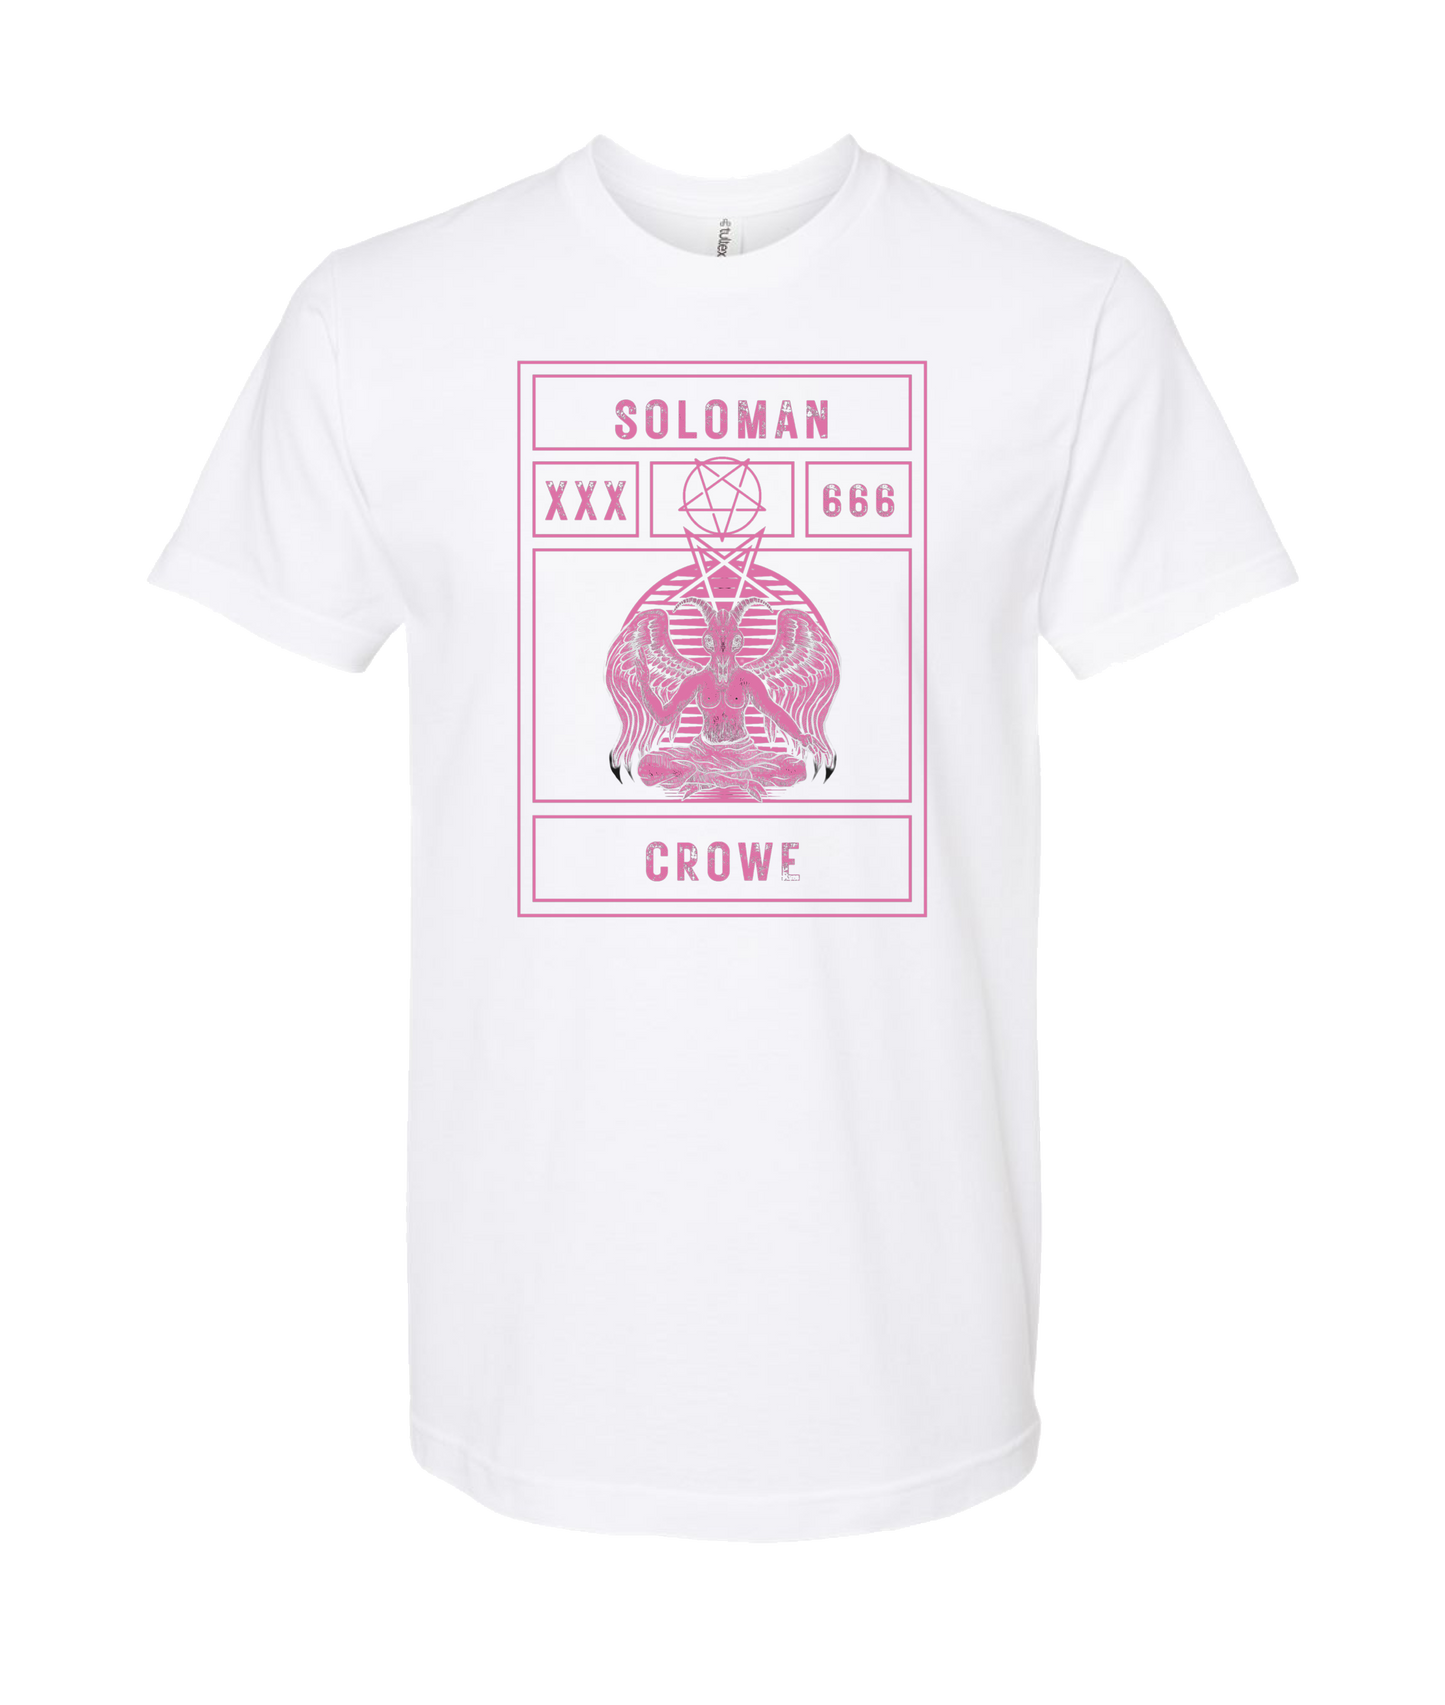 Soloman Crowe - XXX666 - White T Shirt